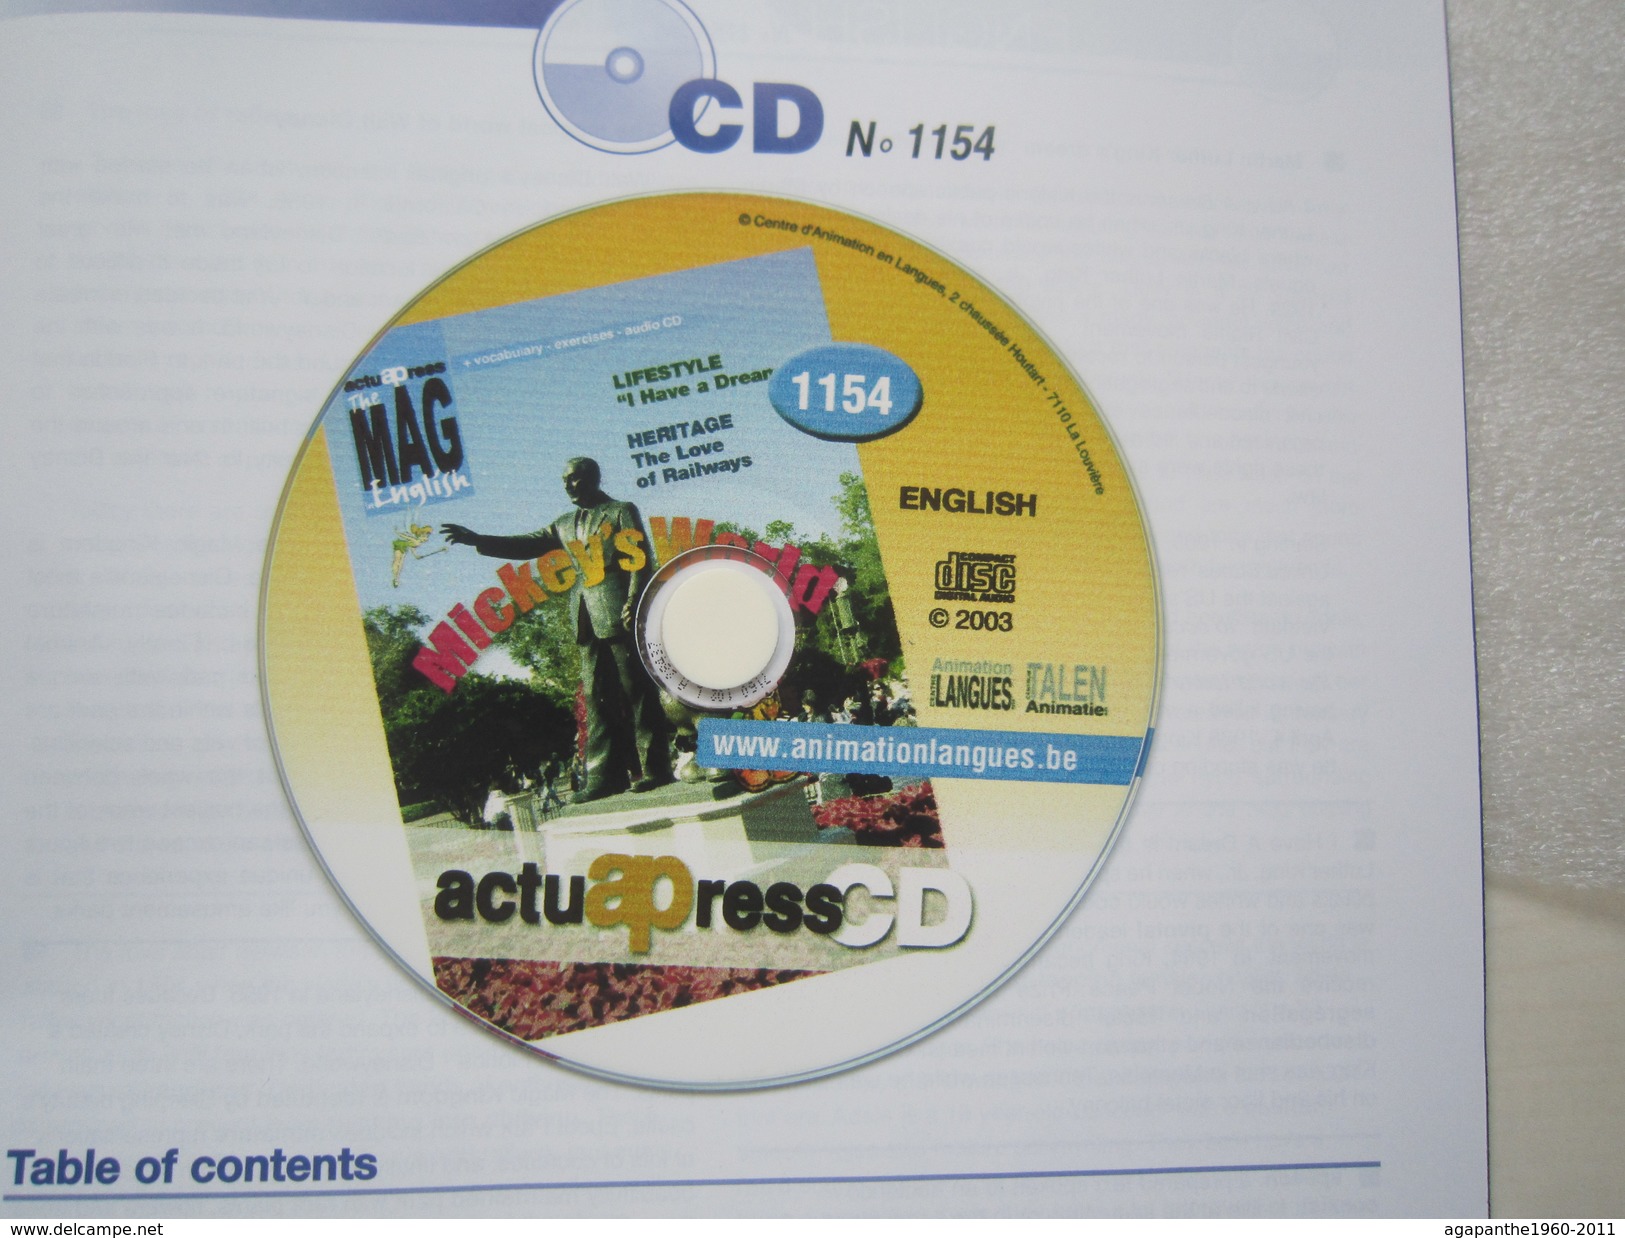 060 - ActuAPress The MAG In ENGLISH  N° 1154 - 2008-05 - MENSUEL  +  CD AUDIO - Educazione/ Insegnamento